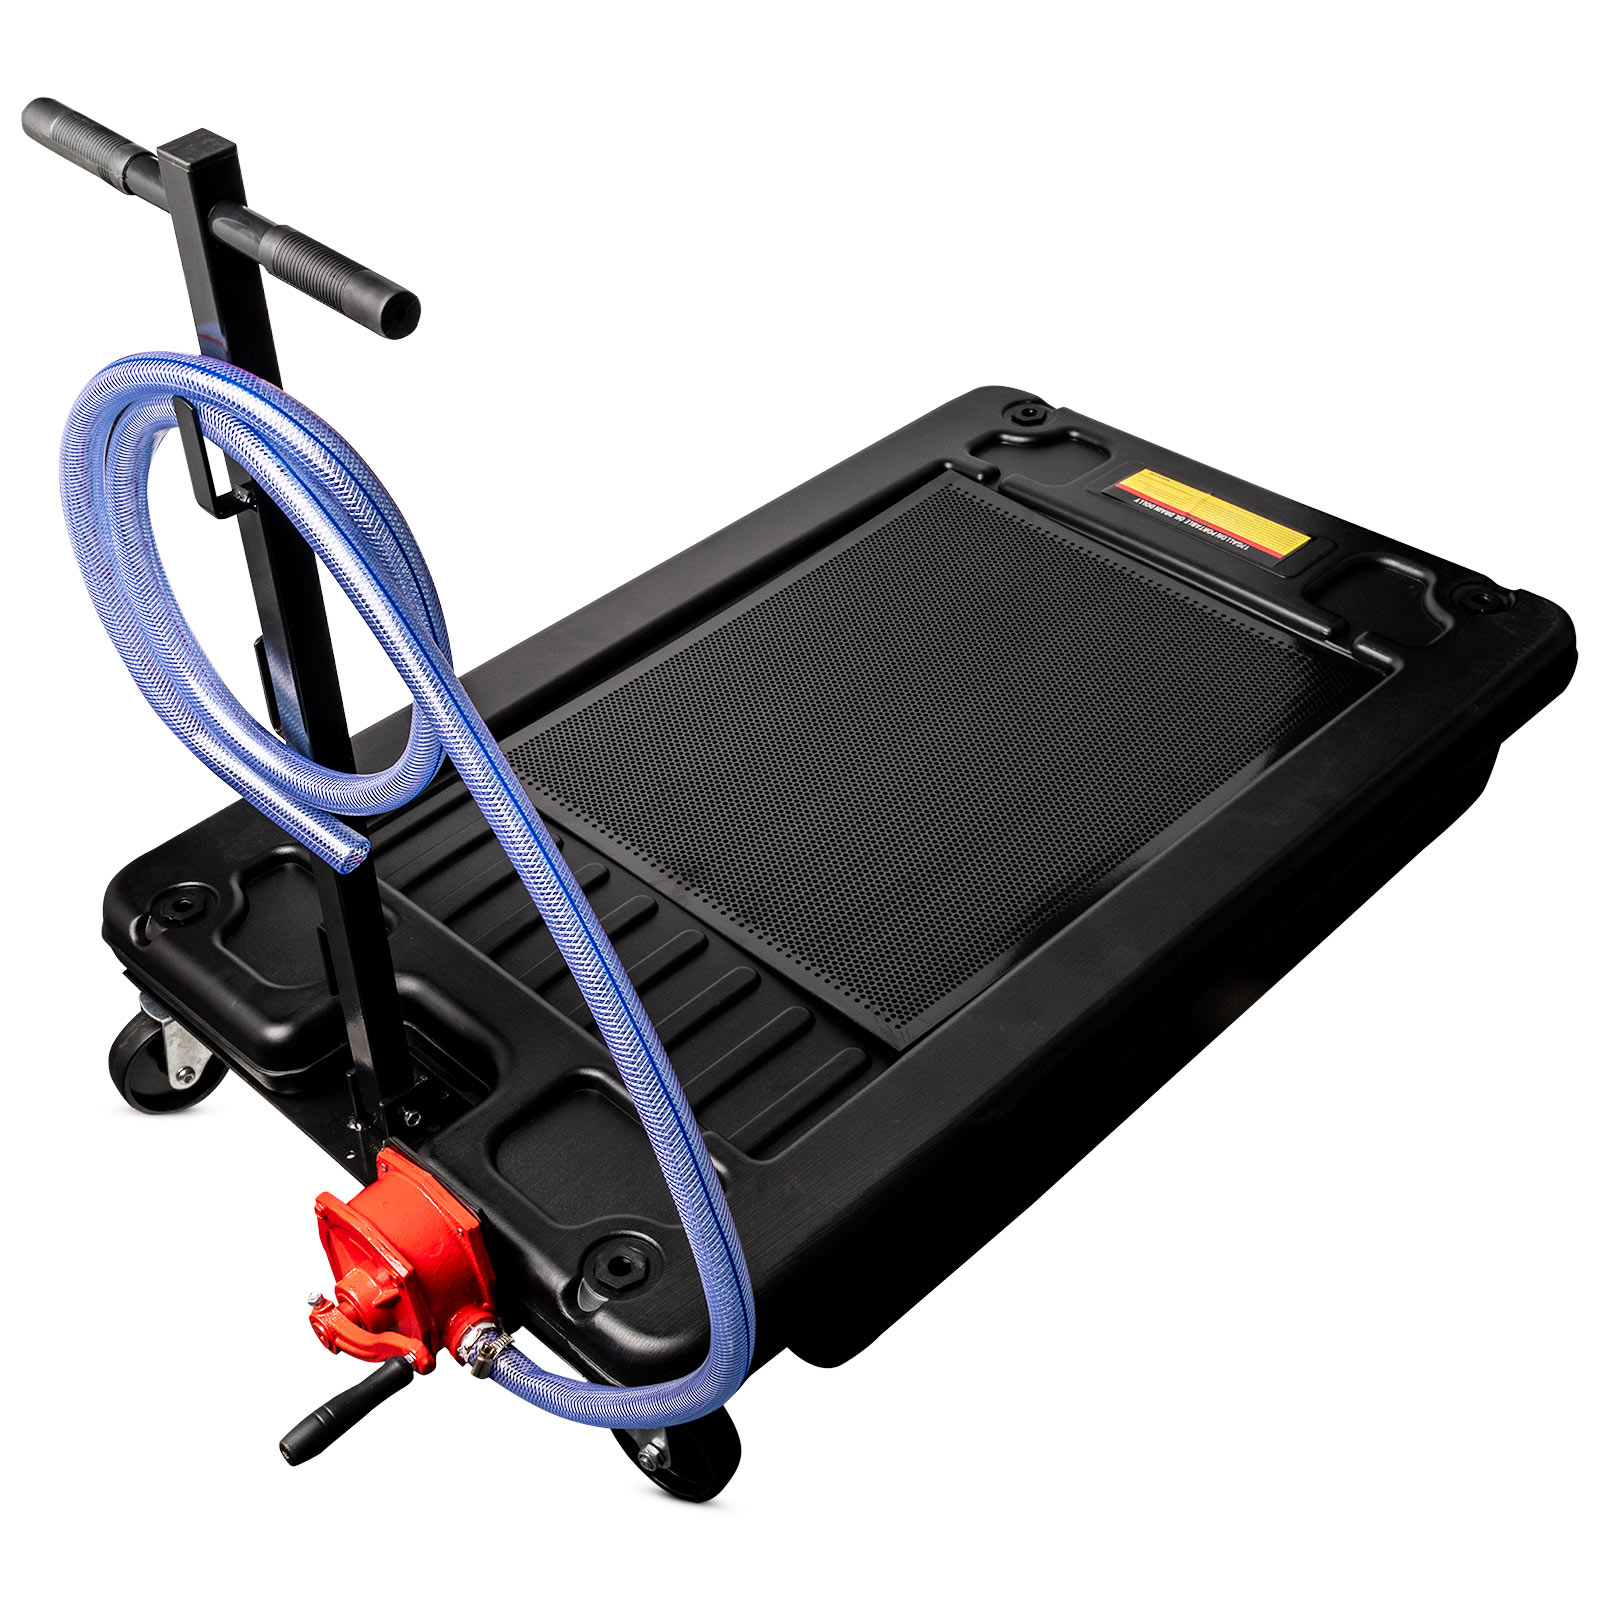 Biltek Portable Oil Drain Pan with Crank Pump 17 Gallon Low Profile Oil Change Pan for Cars, Trucks, SUVs, etc.